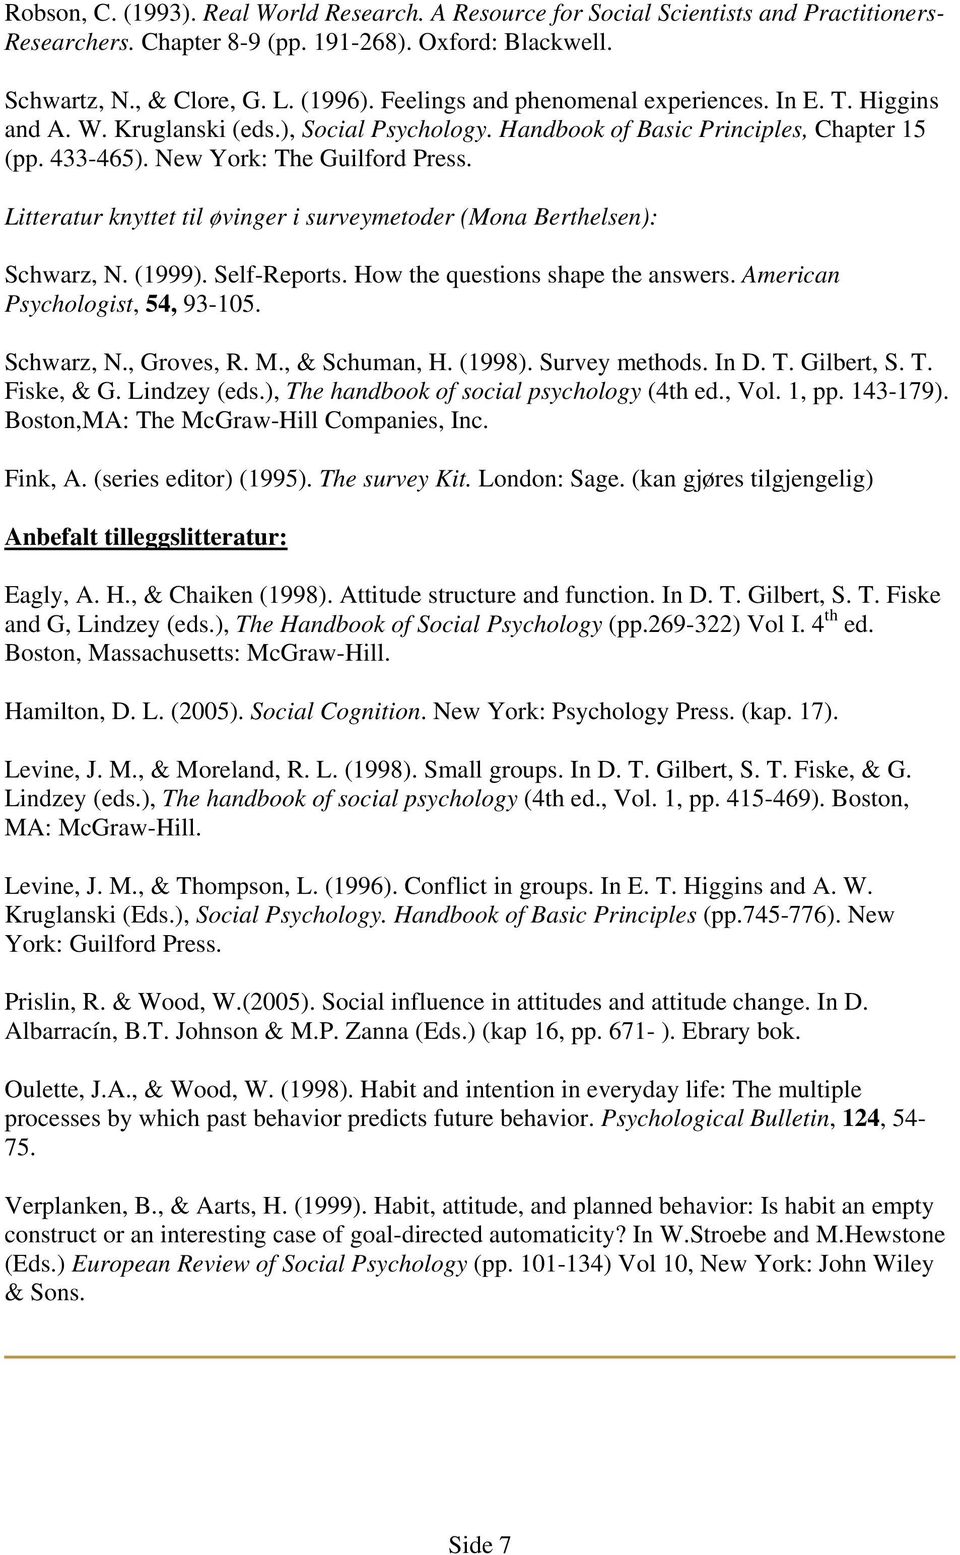 Litteratur knyttet til øvinger i surveymetoder (Mona Berthelsen): Schwarz, N. (1999). Self-Reports. How the questions shape the answers. American Psychologist, 54, 93-105. Schwarz, N., Groves, R. M.